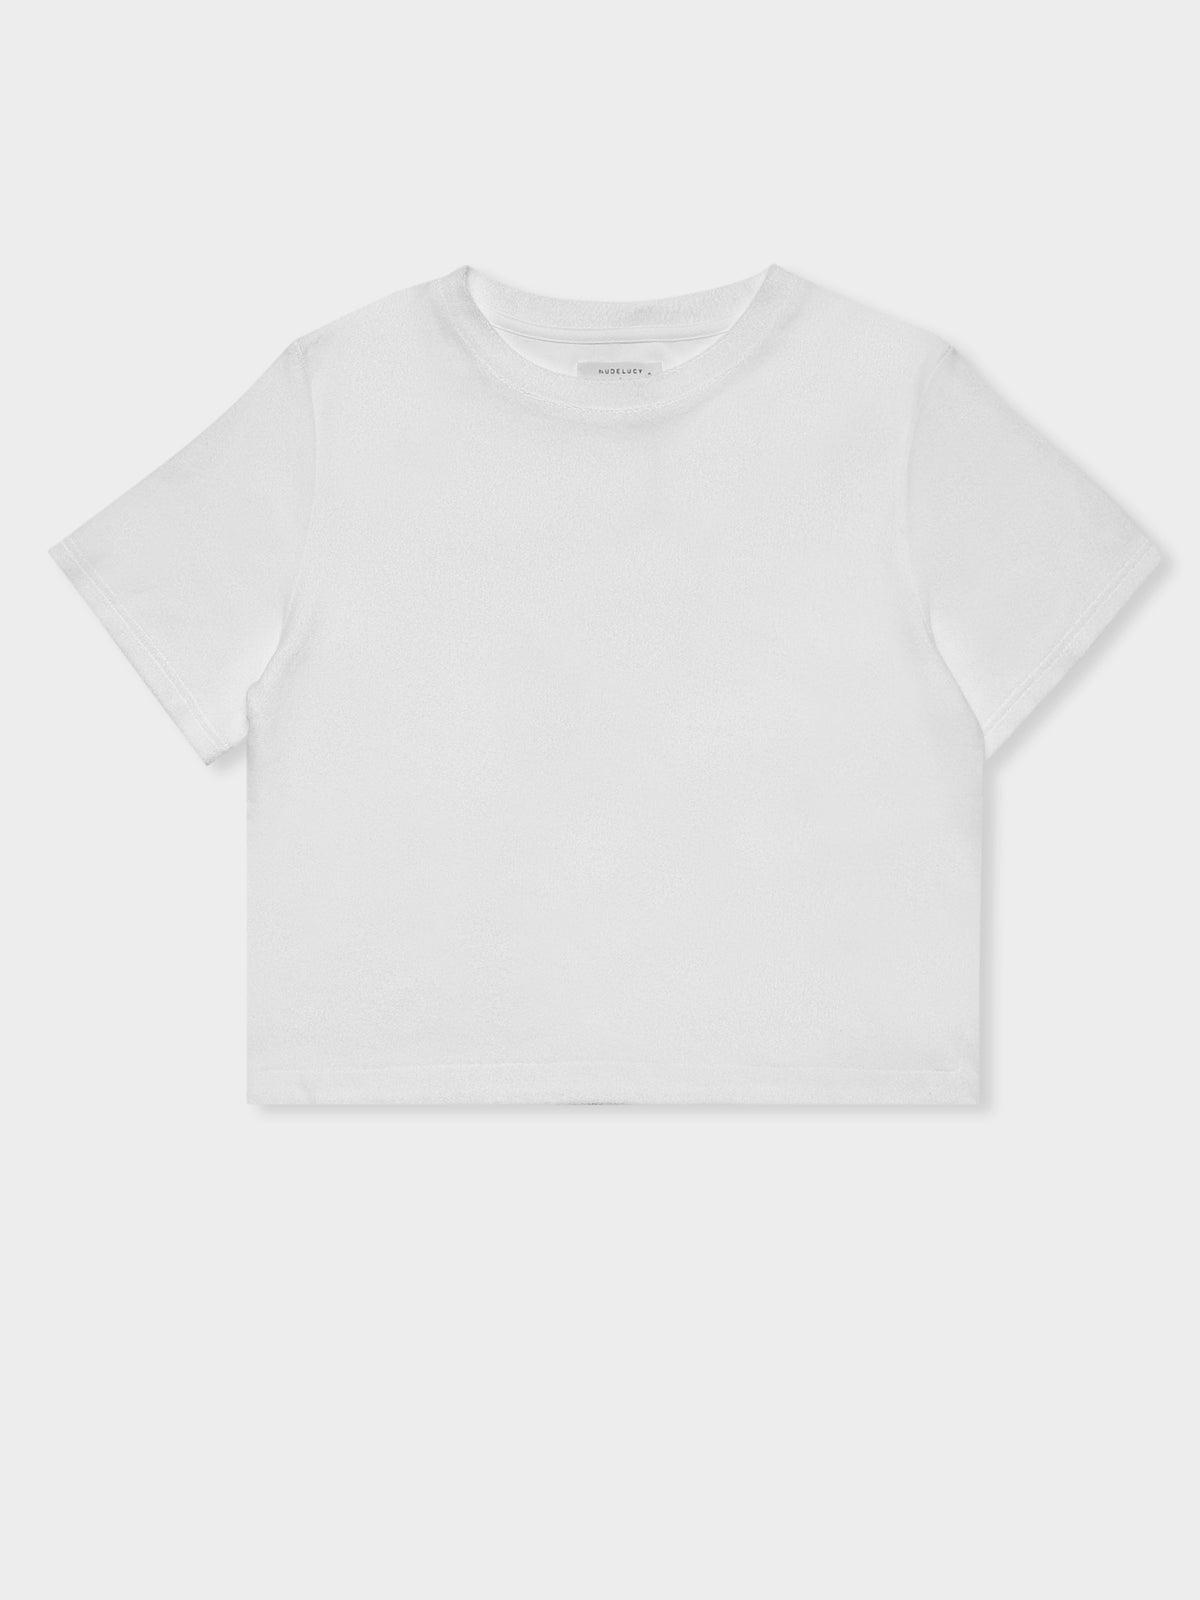 Finn Terry T-Shirt in White